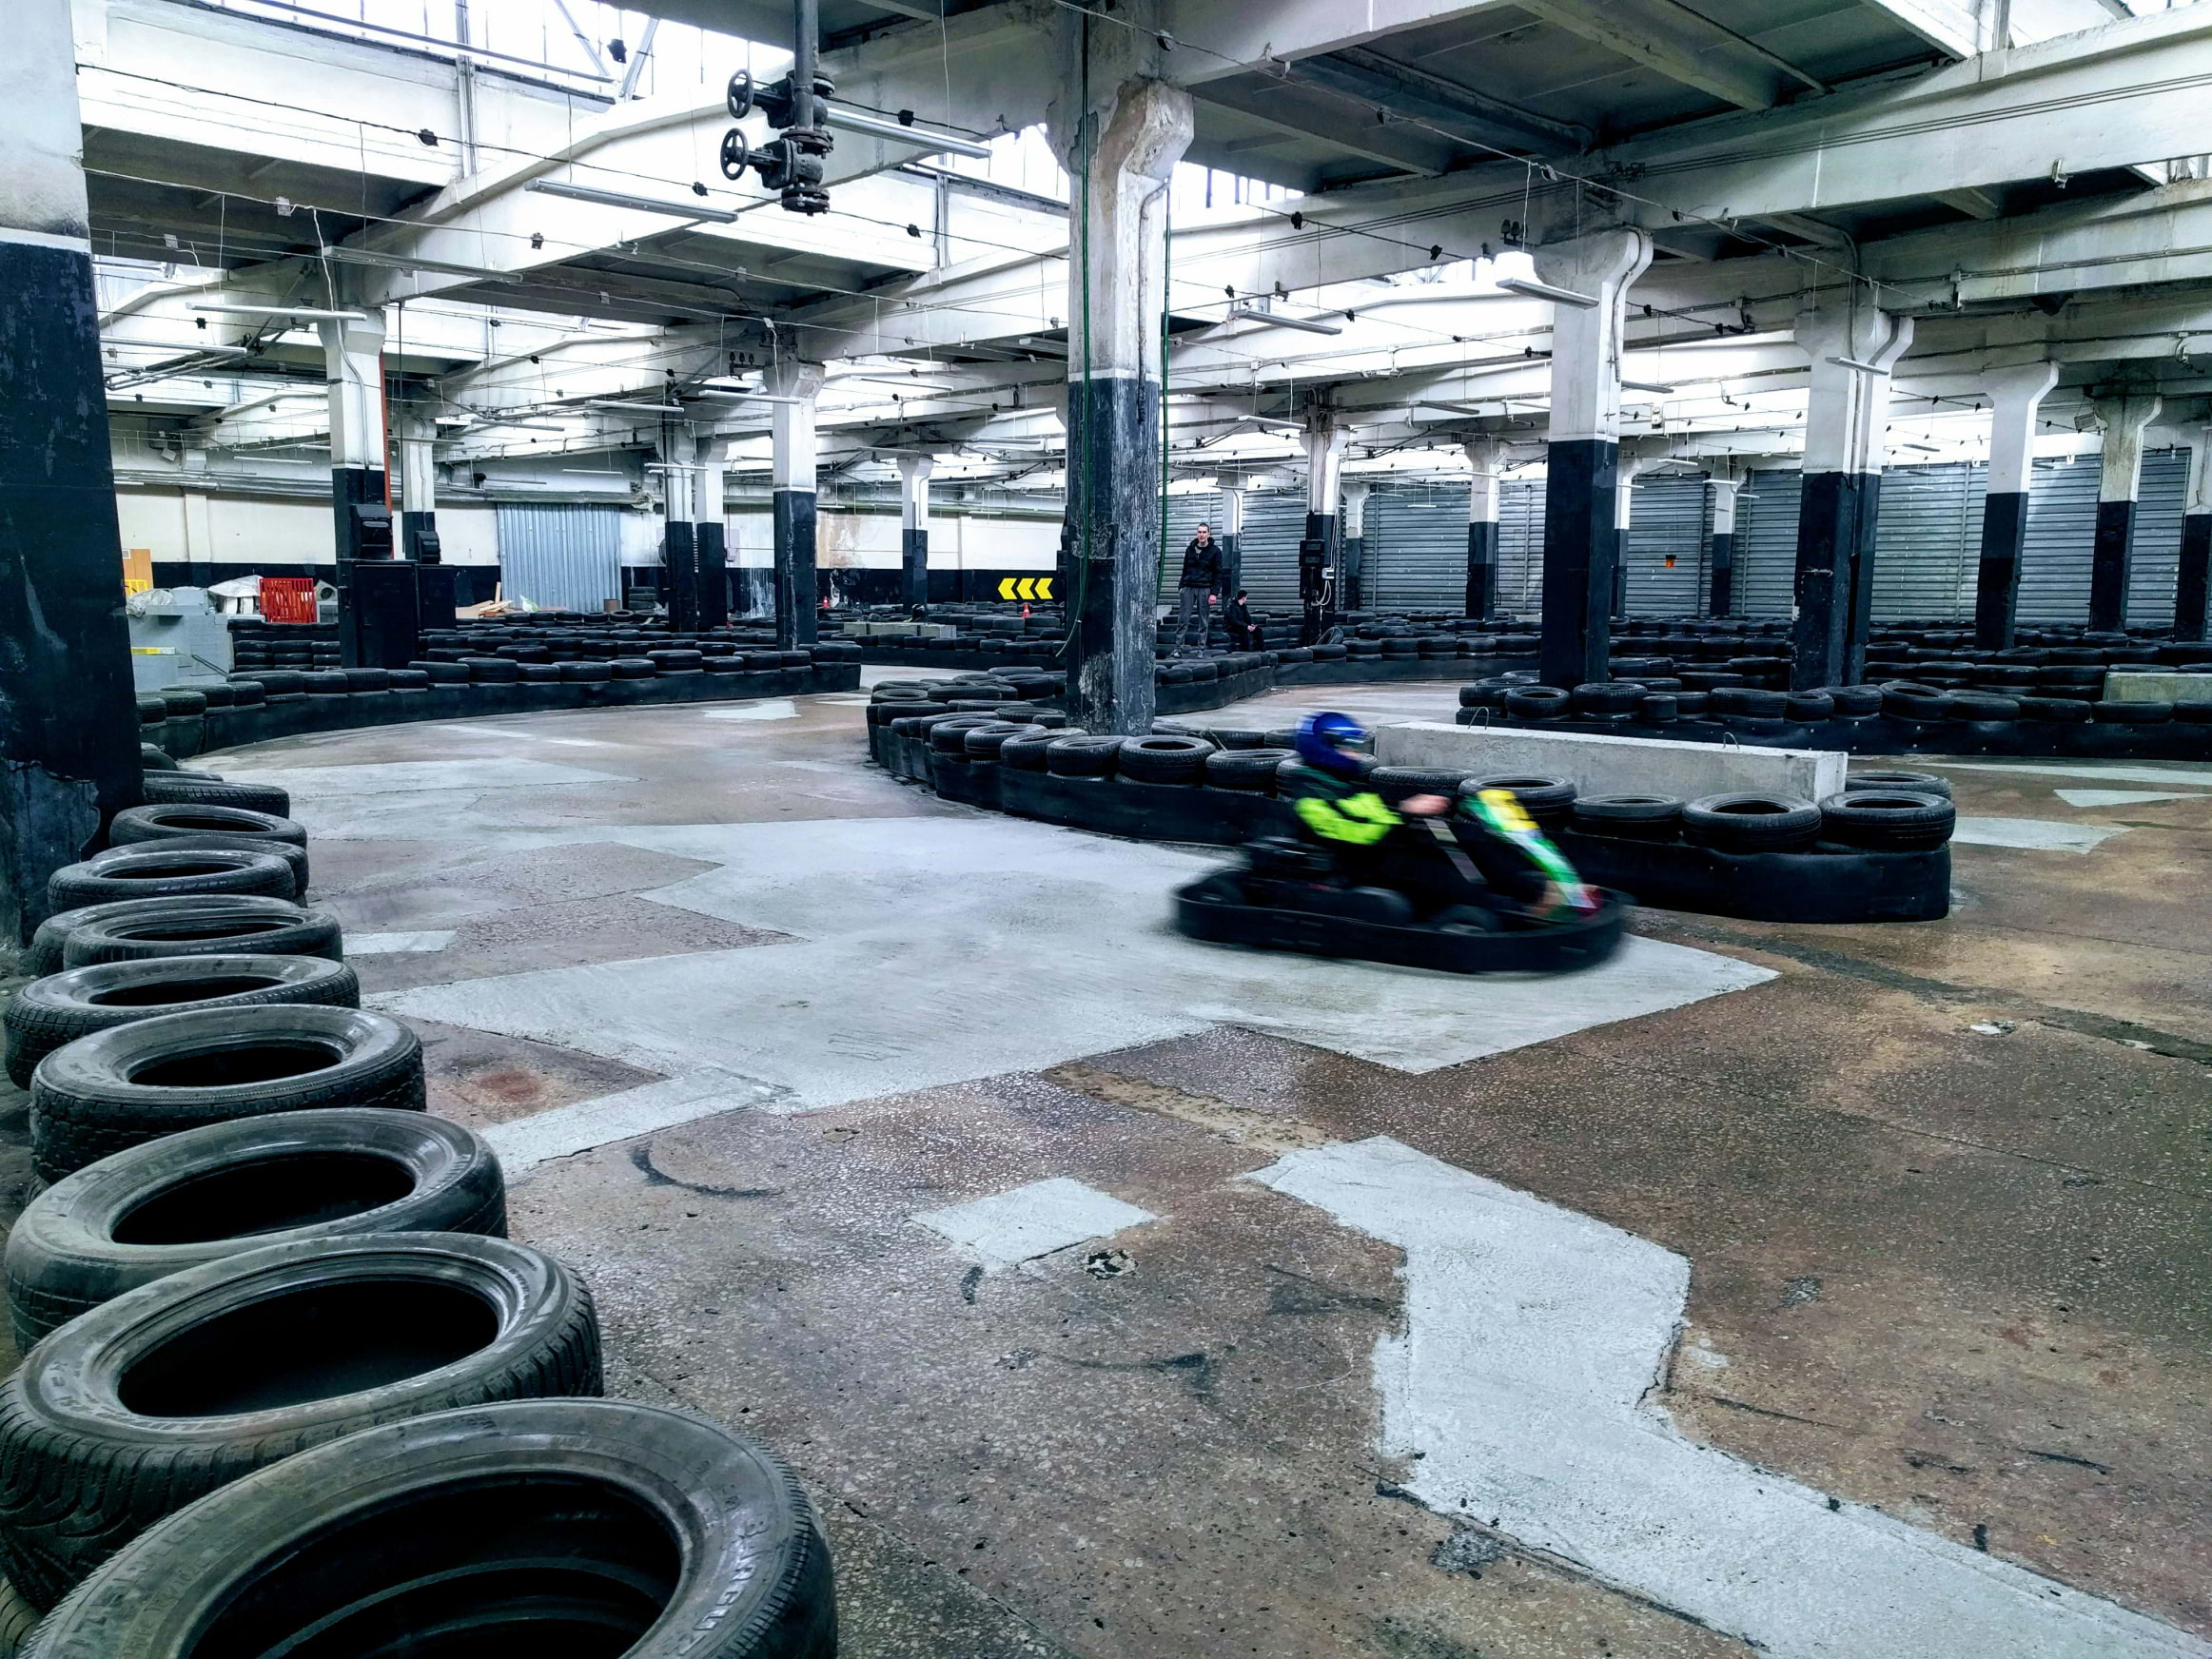 The best indoor go-karting in Manchester